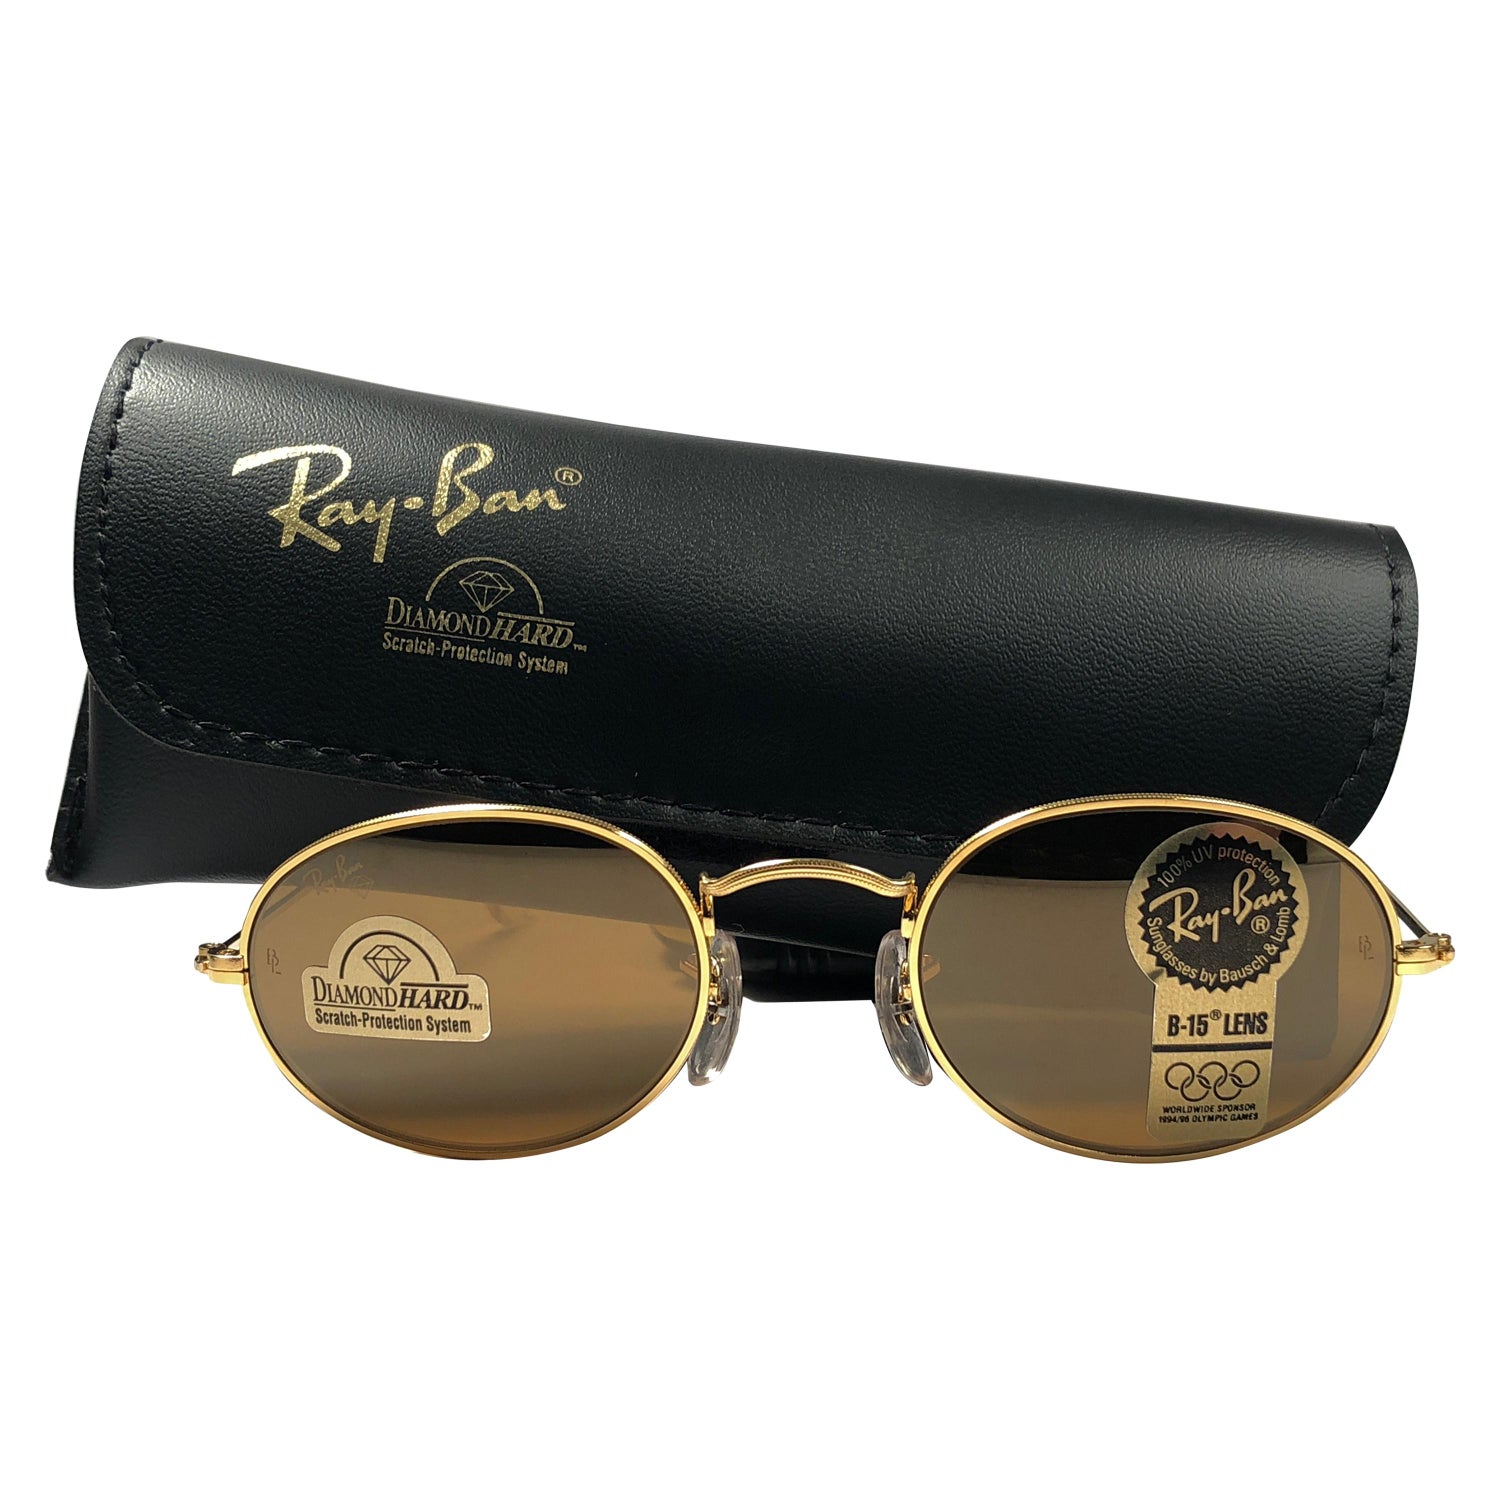 Ray Ban Vintage Oval Sunglasses - 2 For Sale on 1stDibs